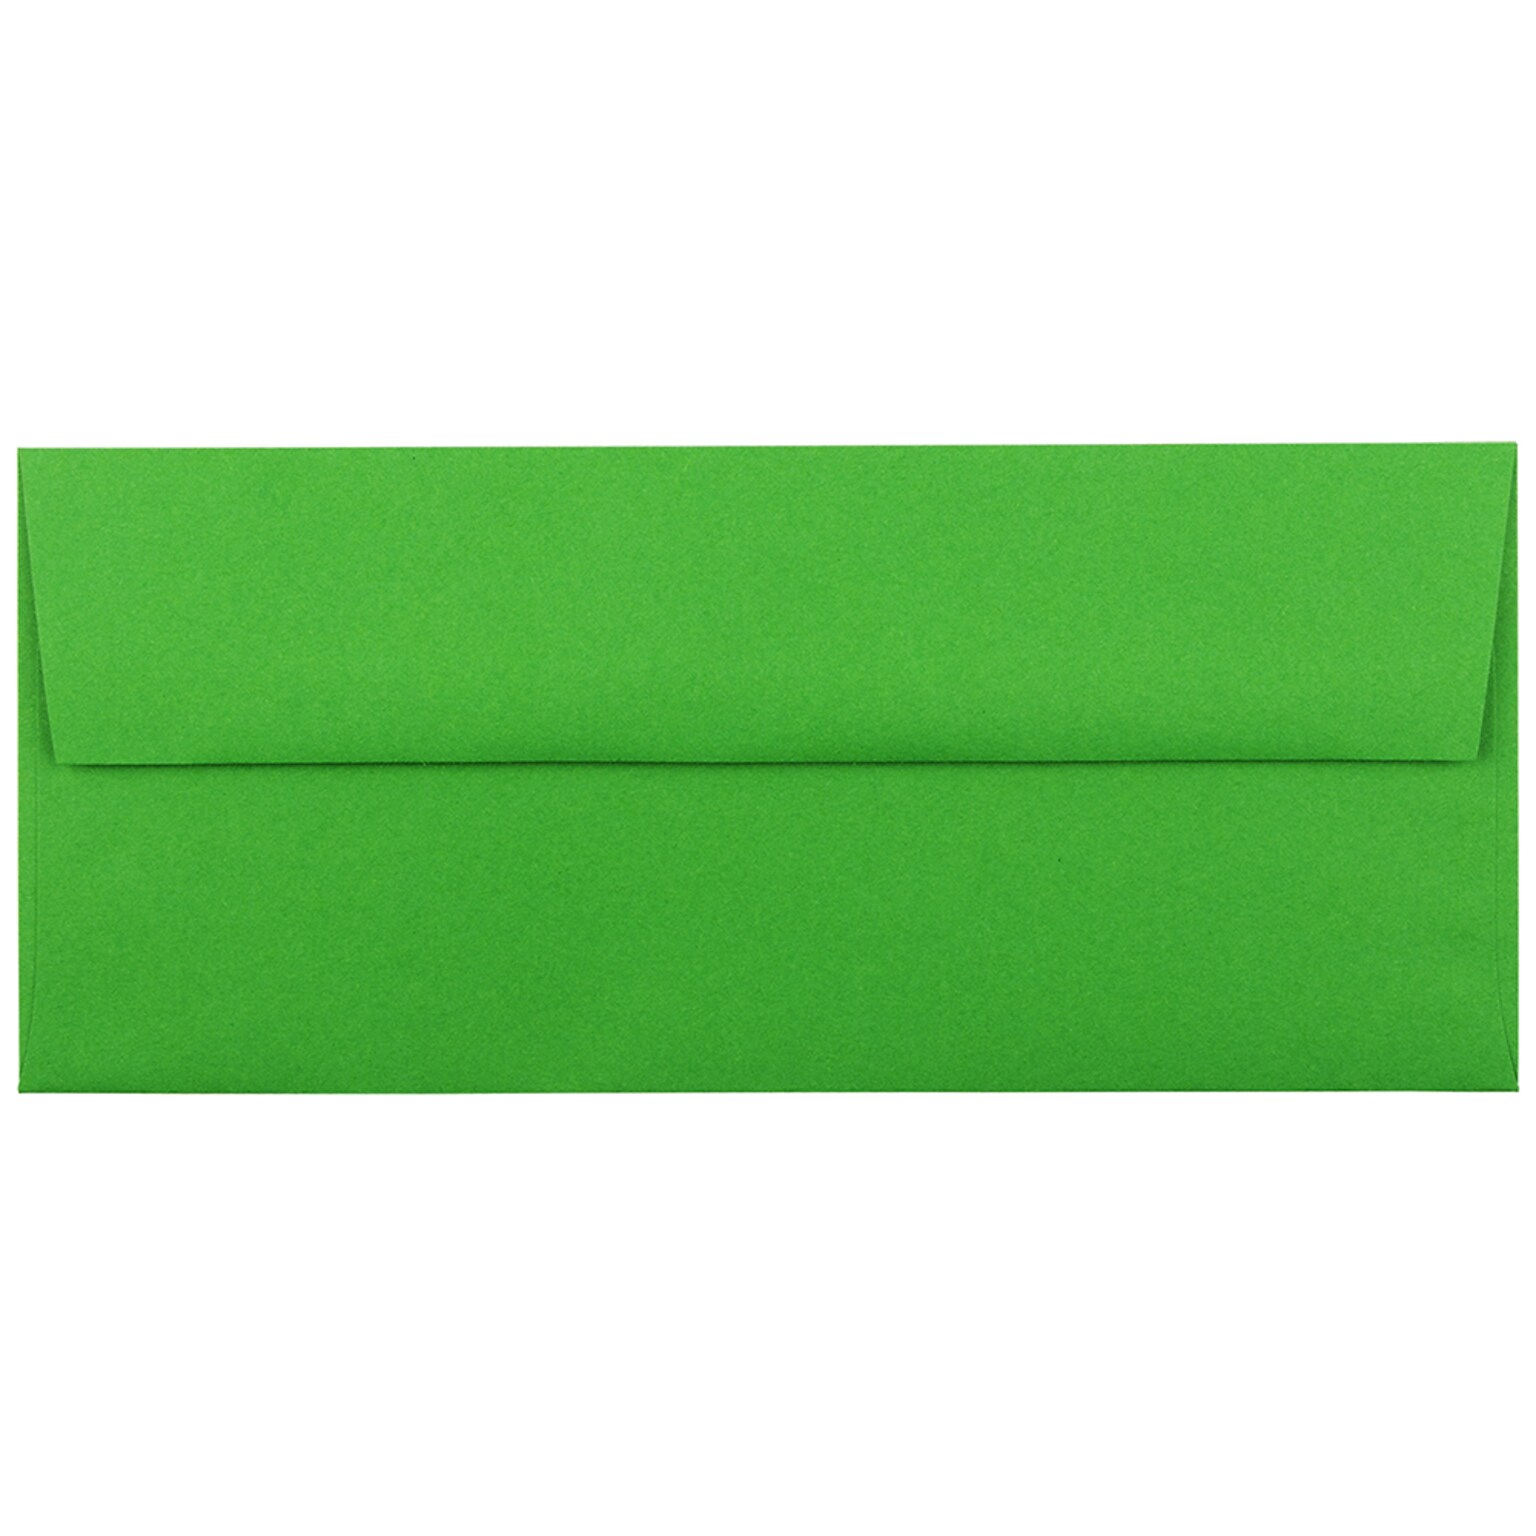 JAM Paper #10 Business Envelope, 4 1/8 x 9 1/2, Green, 25/Pack (15862)